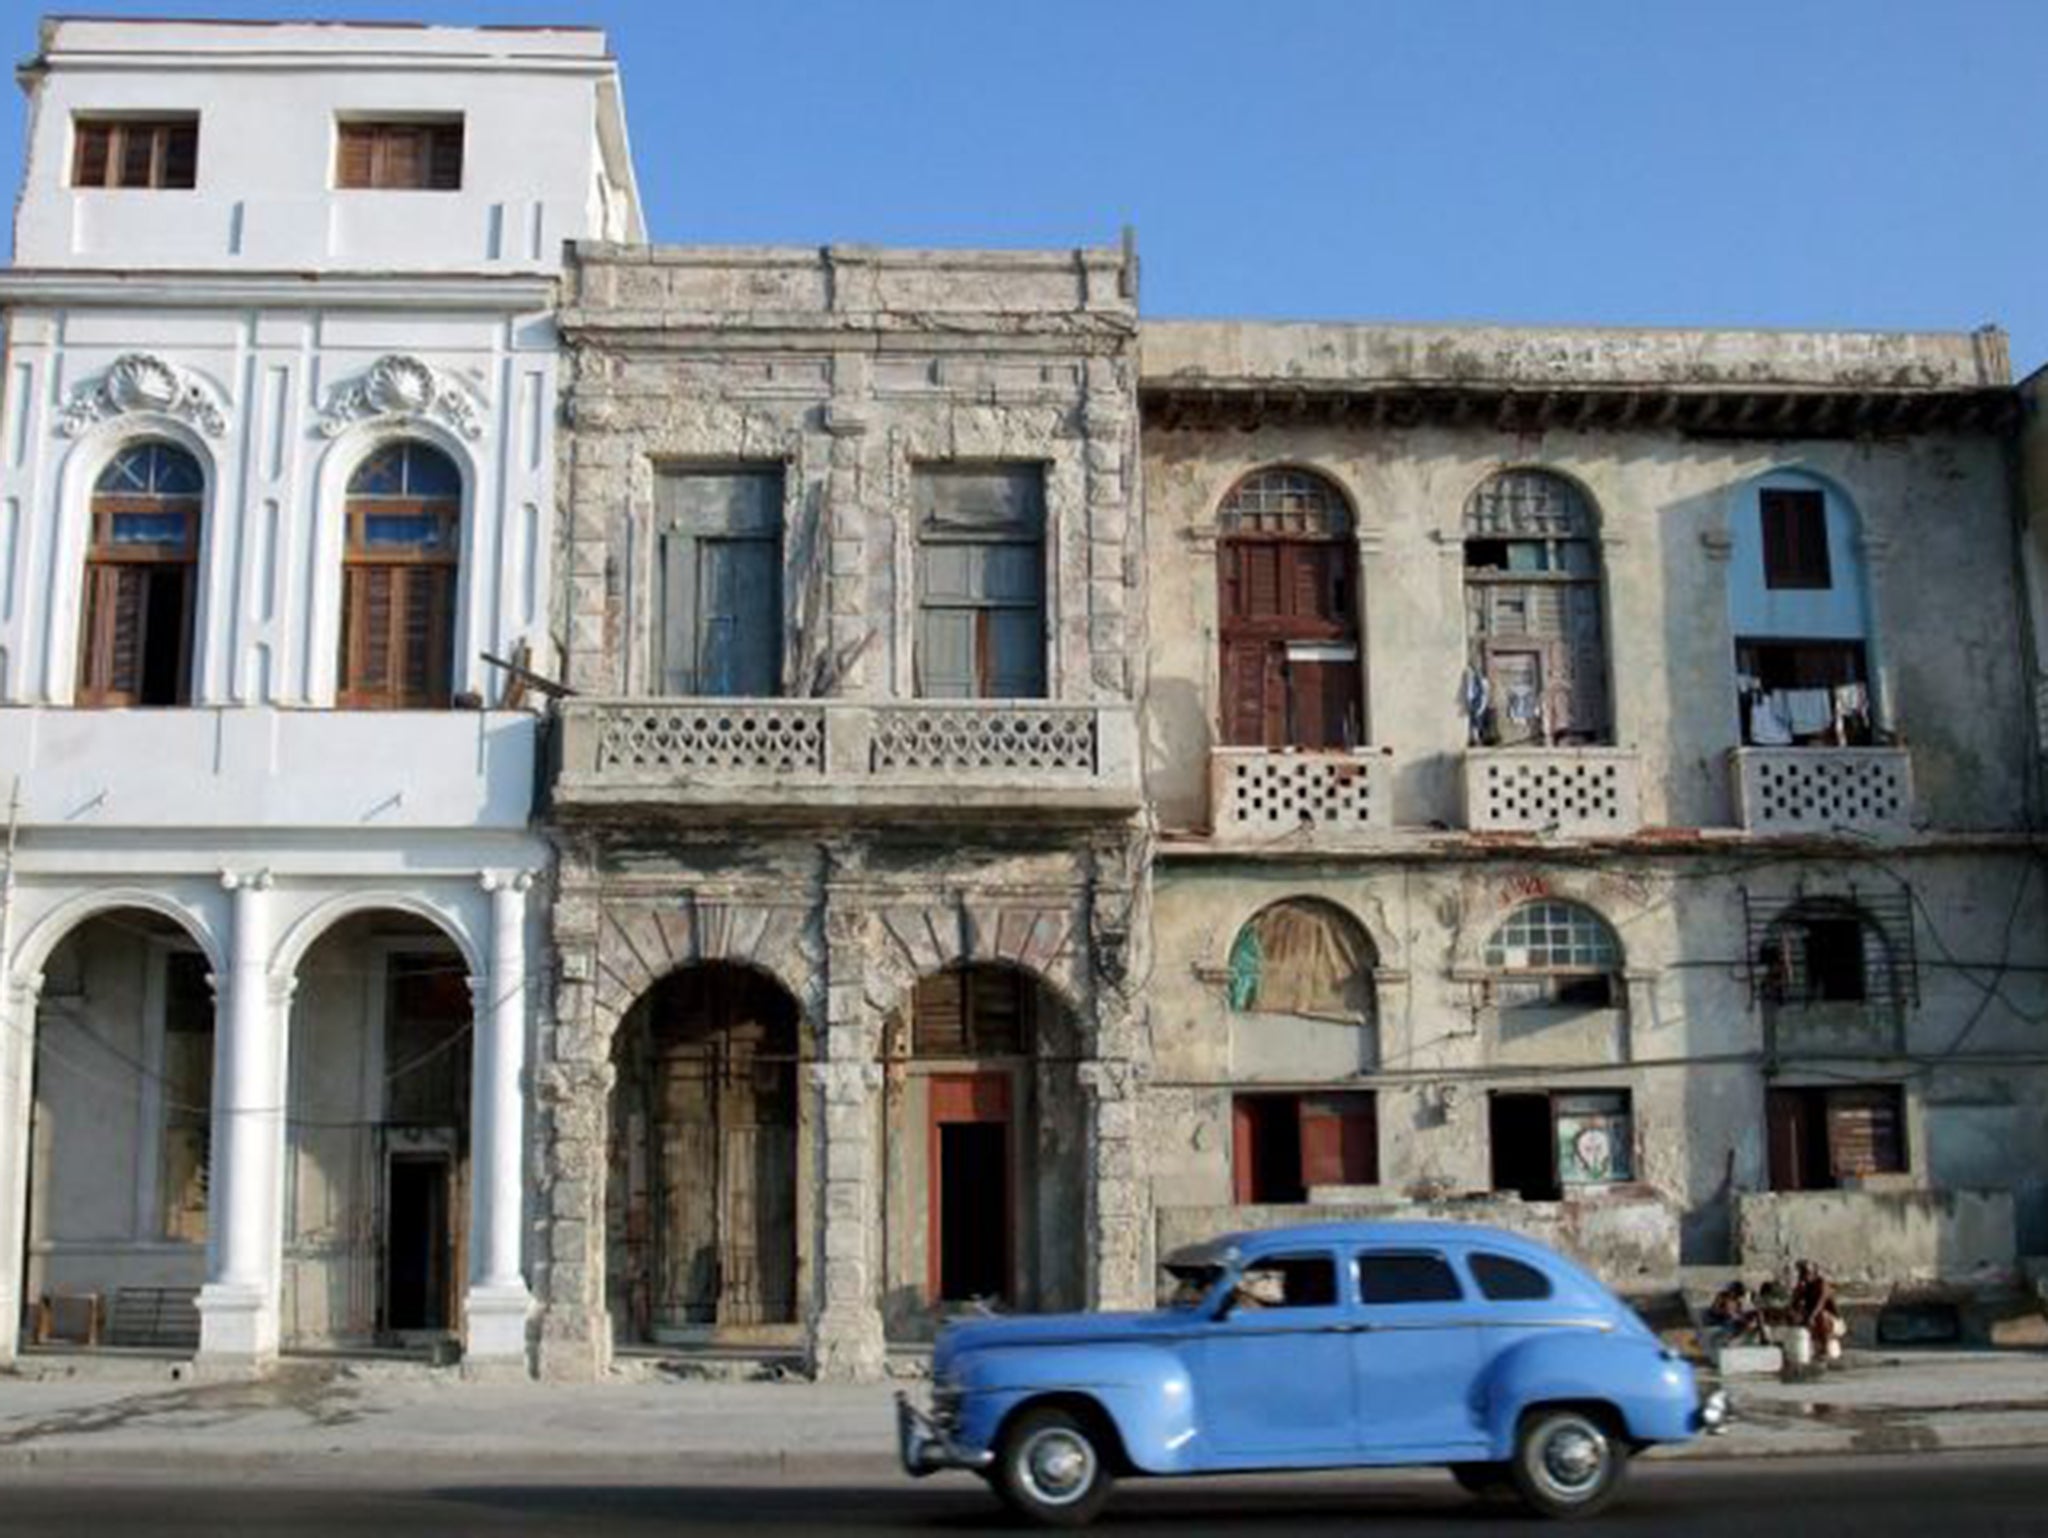 A car runs in the 'Malecon' of Havana, Cuba